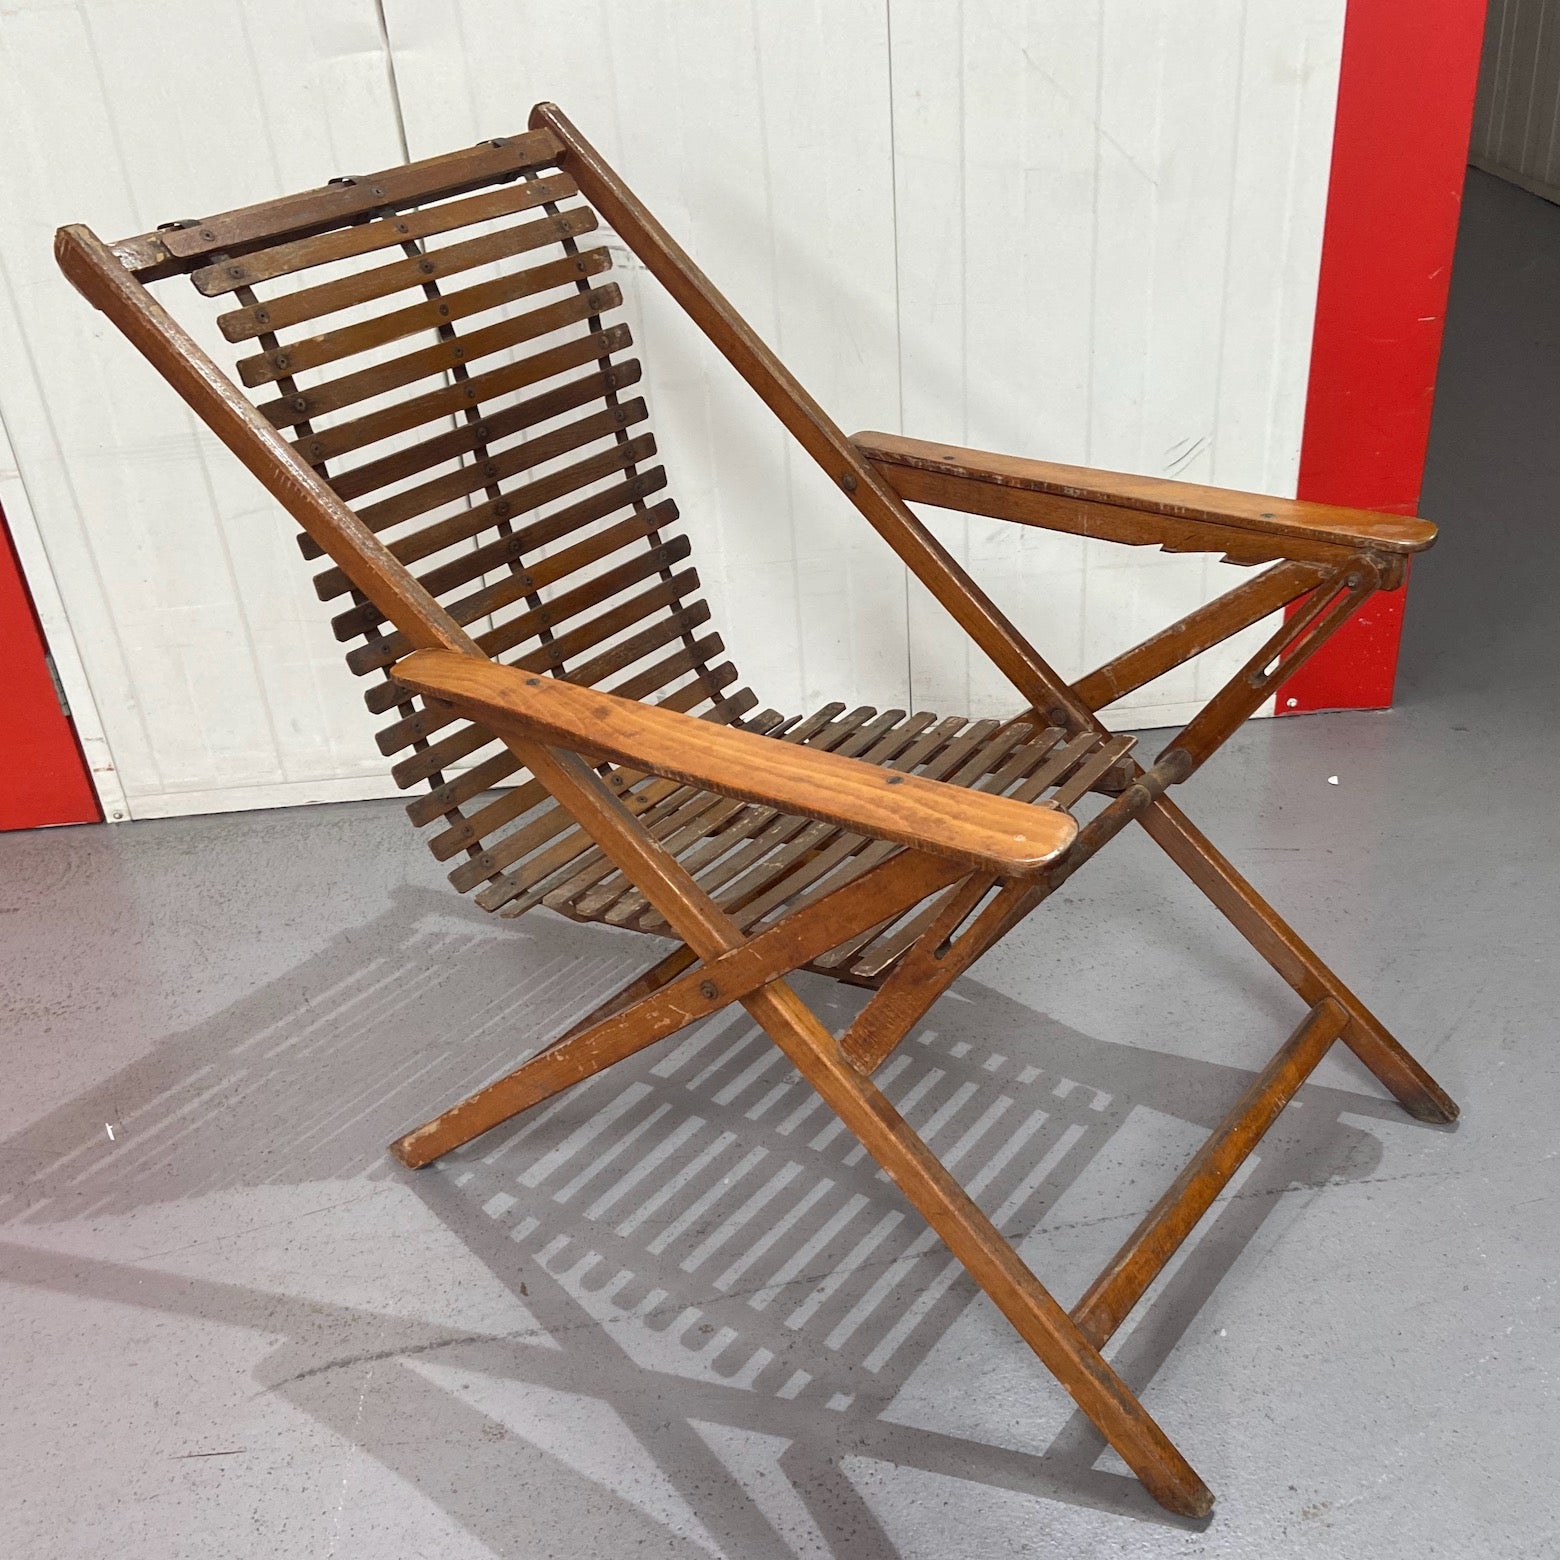 folding steamer or garden adjustable chair, circa 1920's
3 positions
rocking movement 